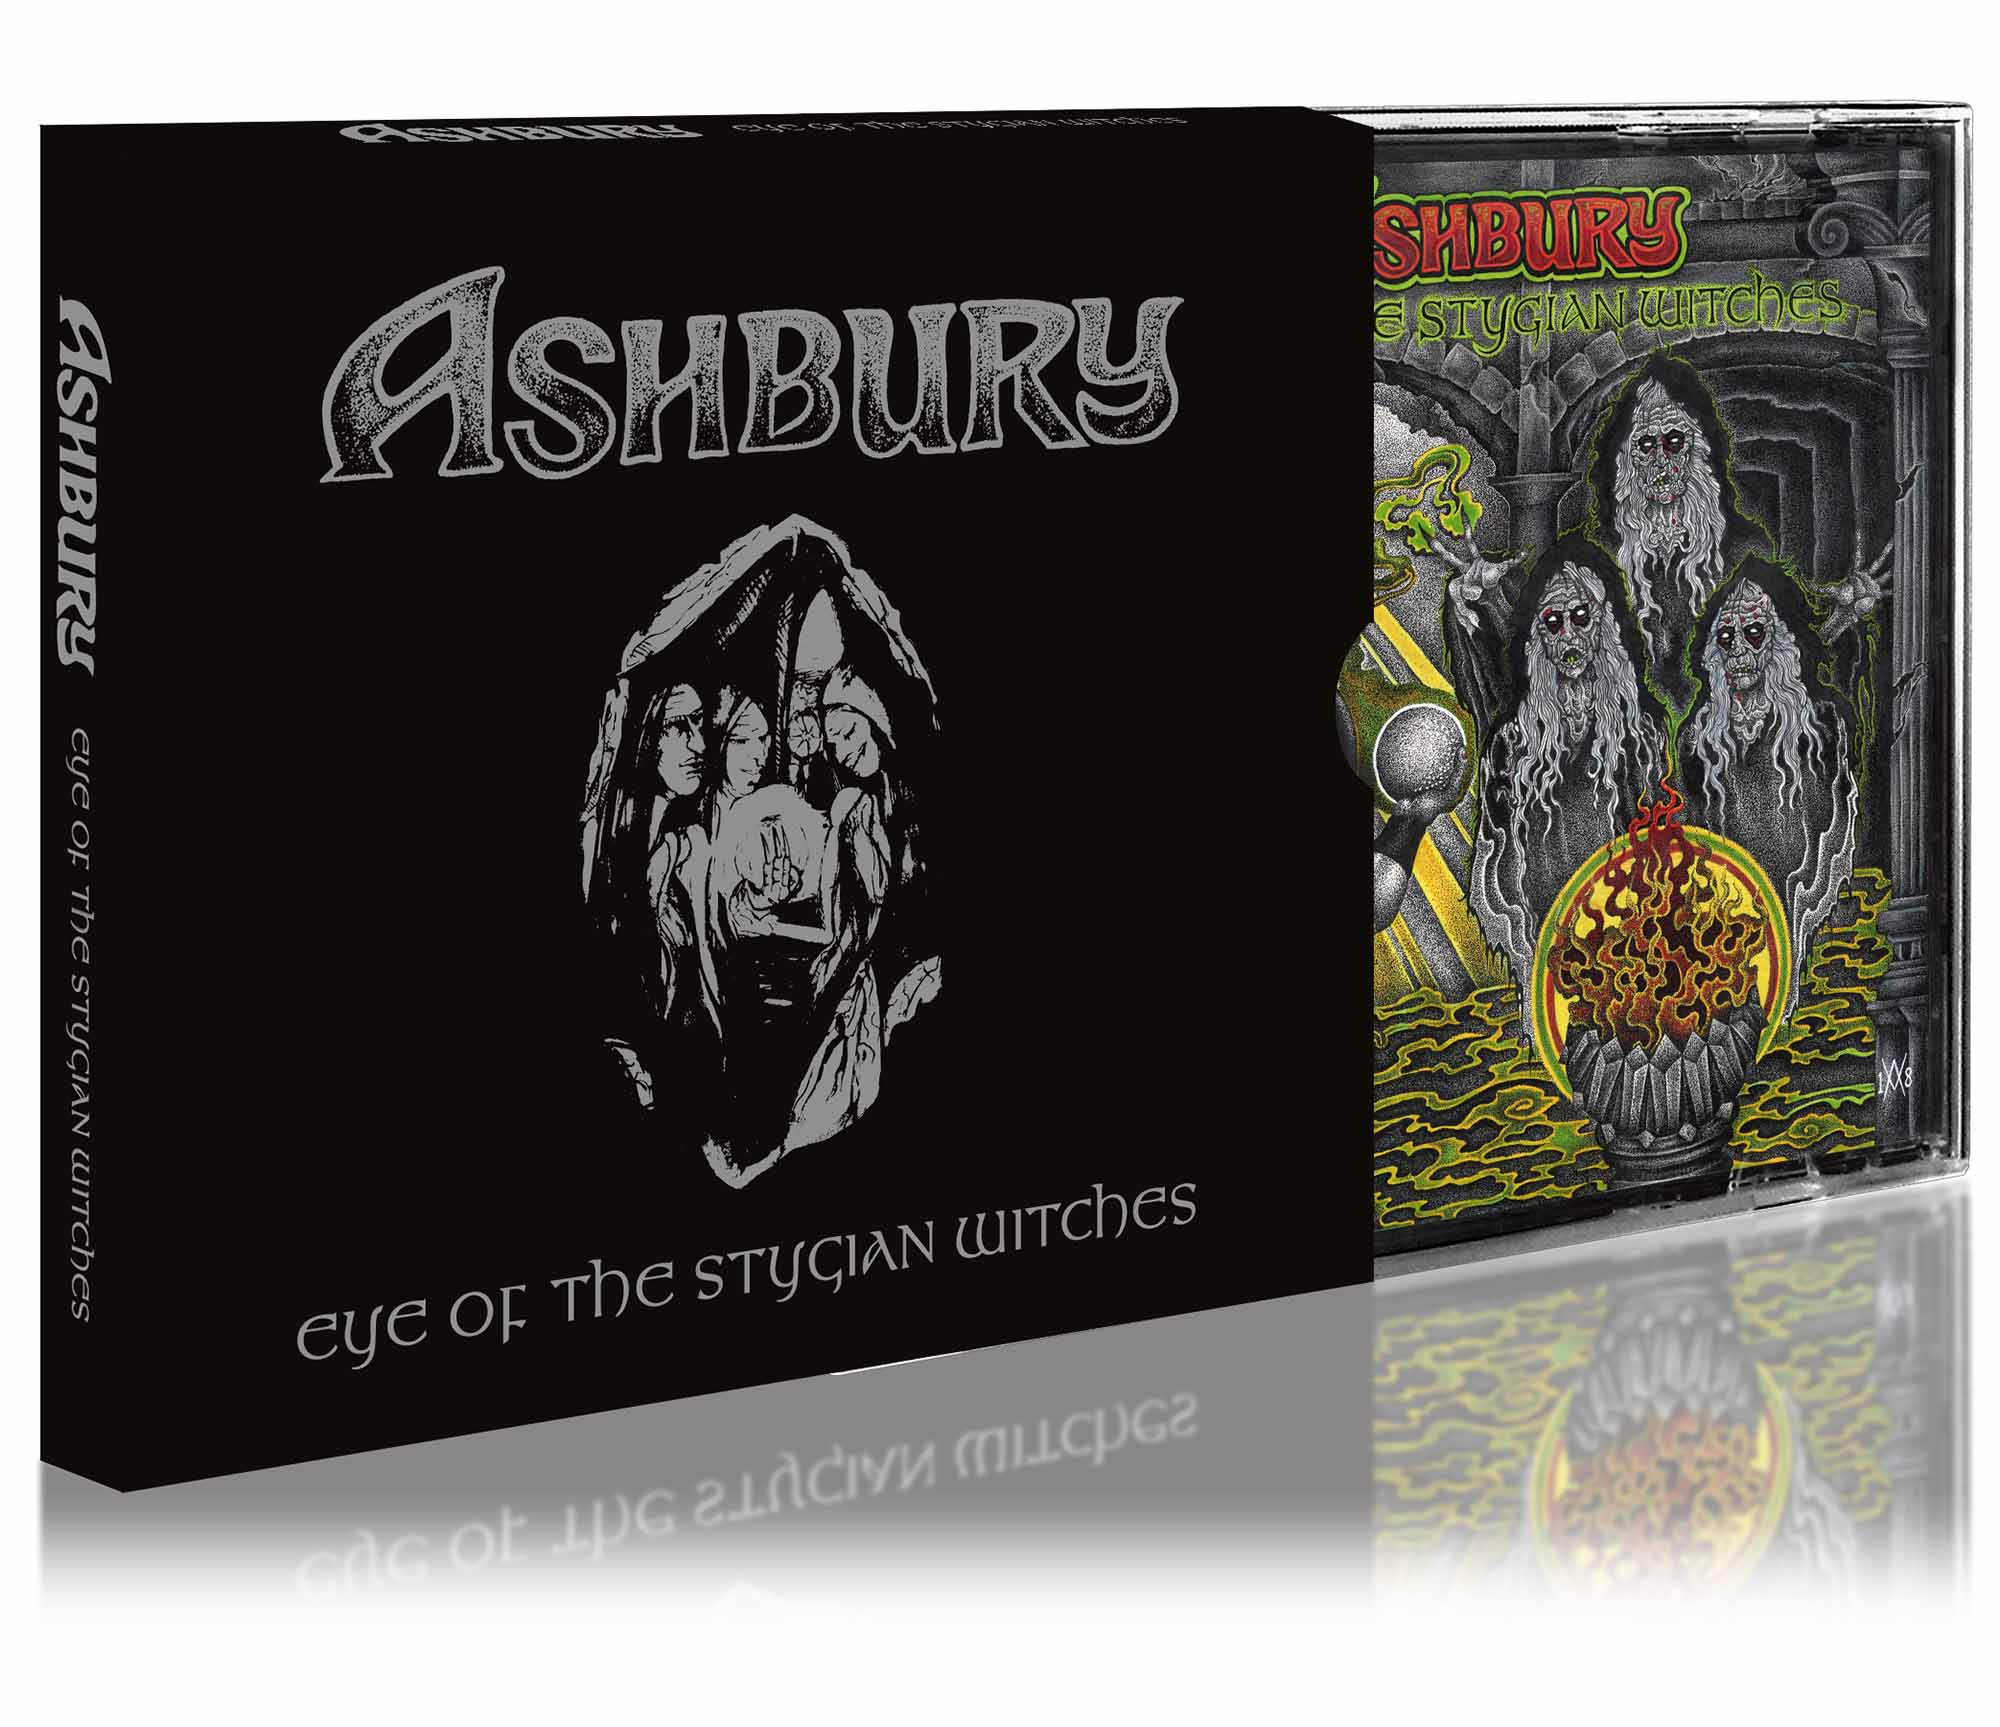 ASHBURY - Eye of the Stygian Witches  CD